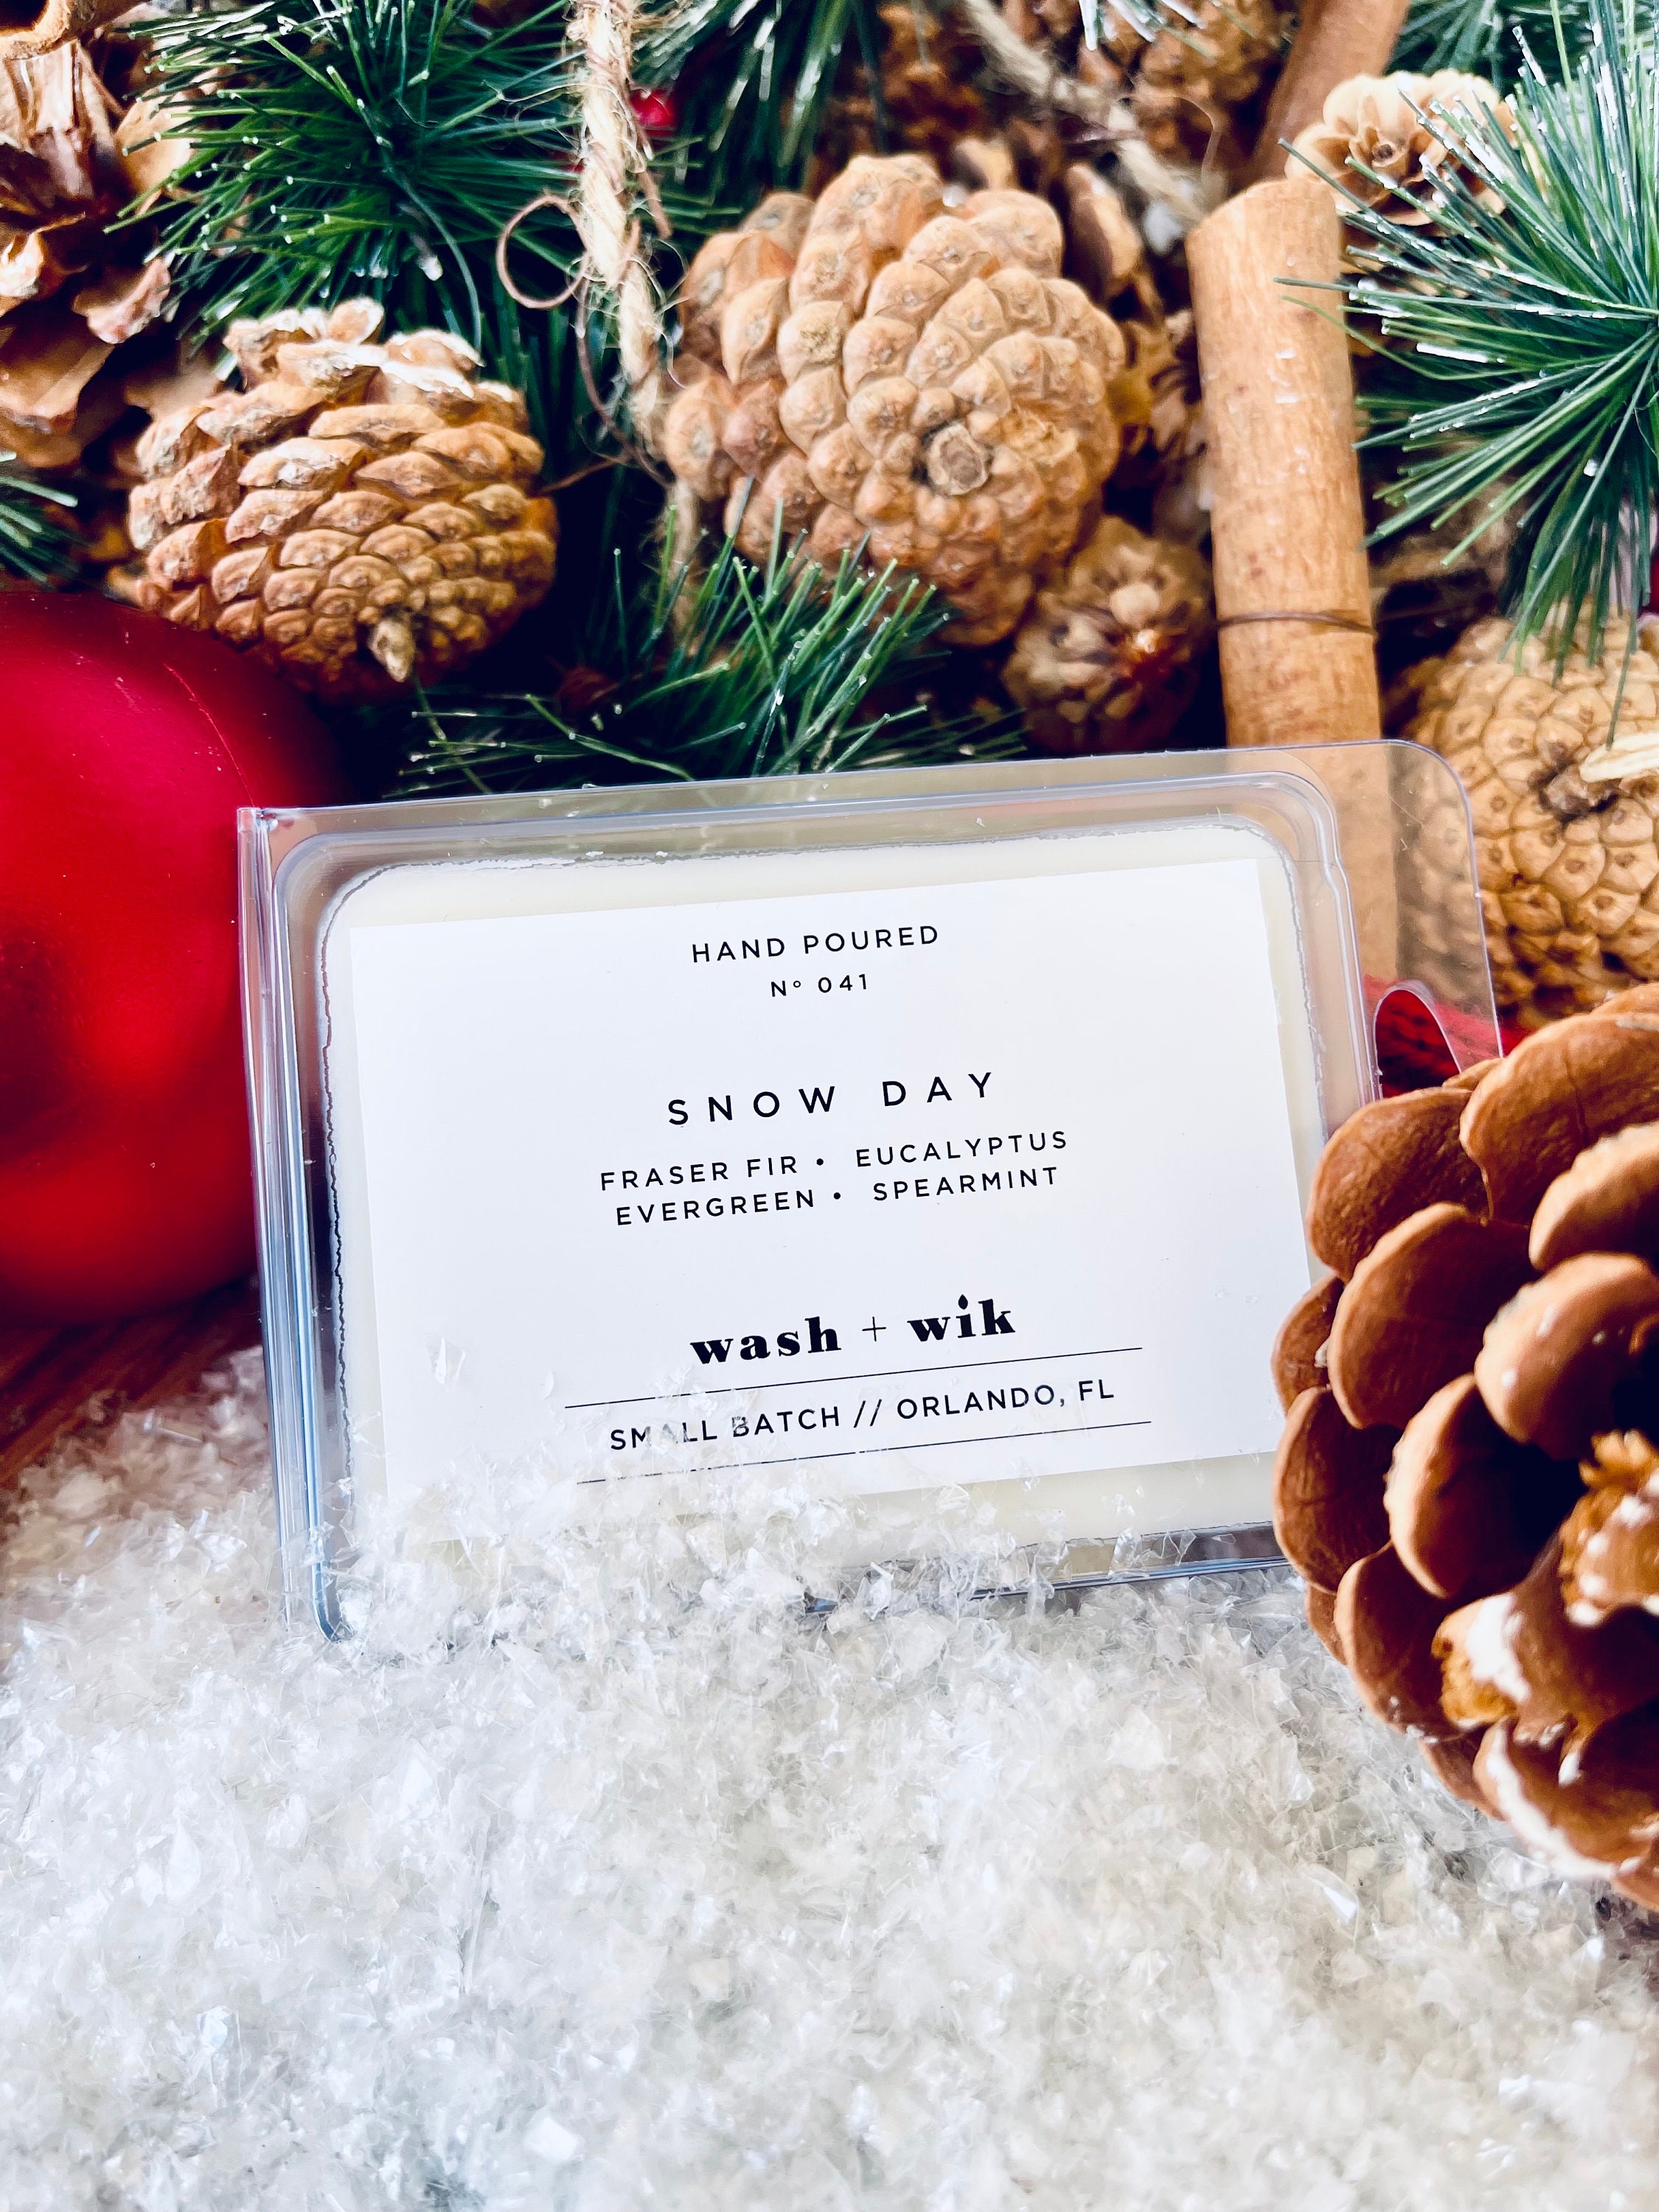 Holiday Trees Wax Melt Christmas Ornament, Soy Tart Wax – Paper Cute Ink